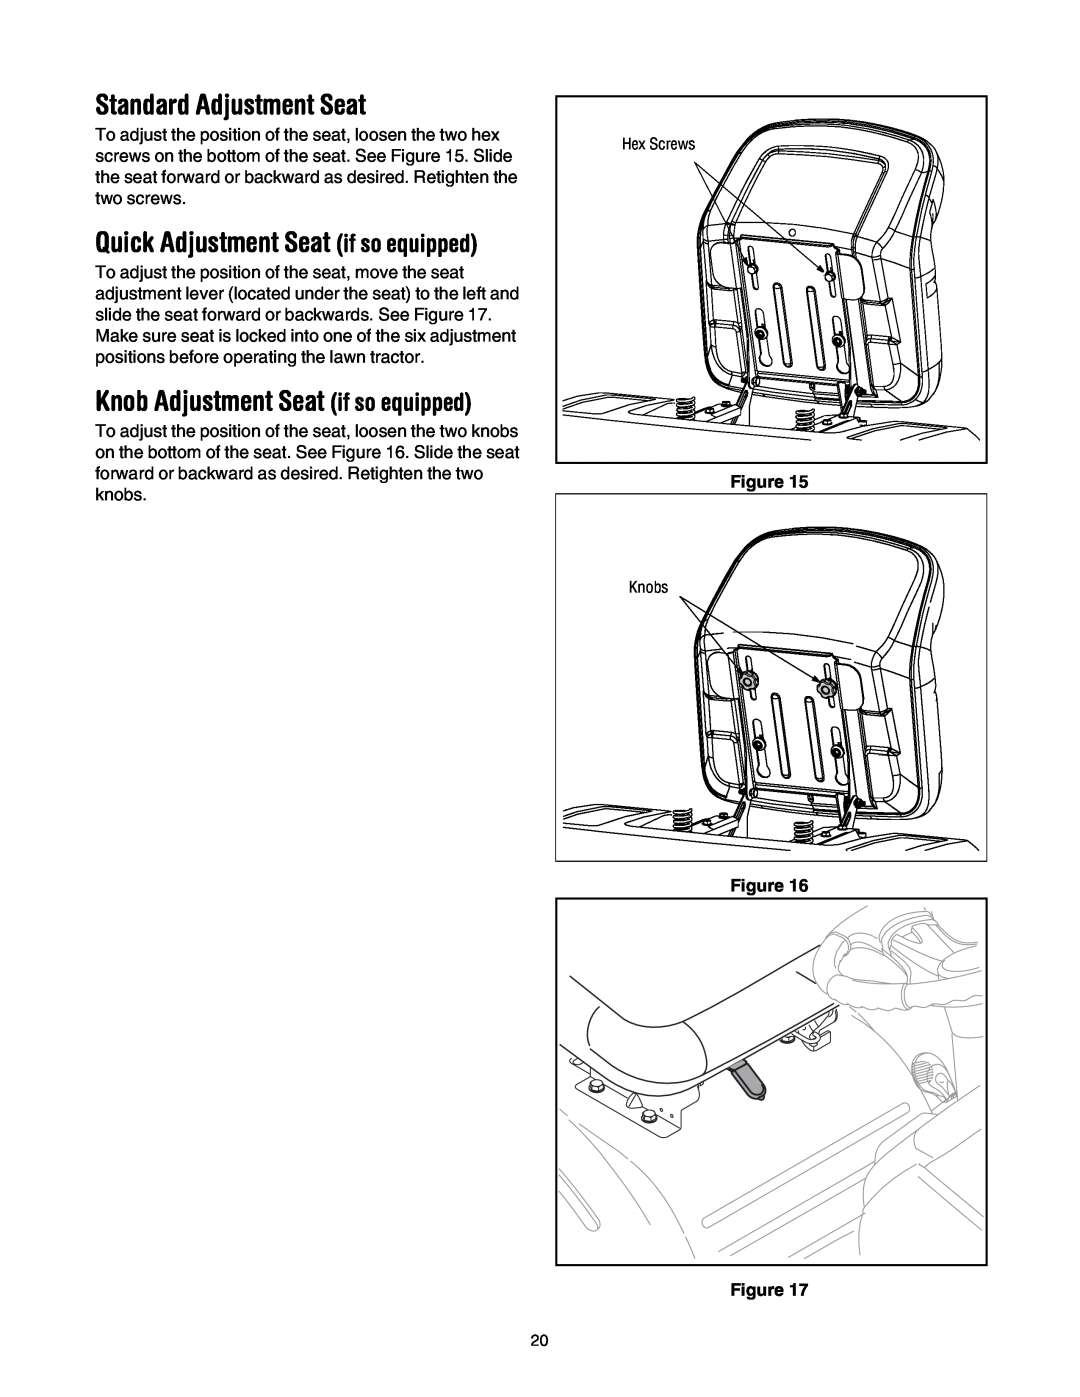 MTD 795, 792, 791, 790 Standard Adjustment Seat, Quick Adjustment Seat if so equipped, Knob Adjustment Seat if so equipped 